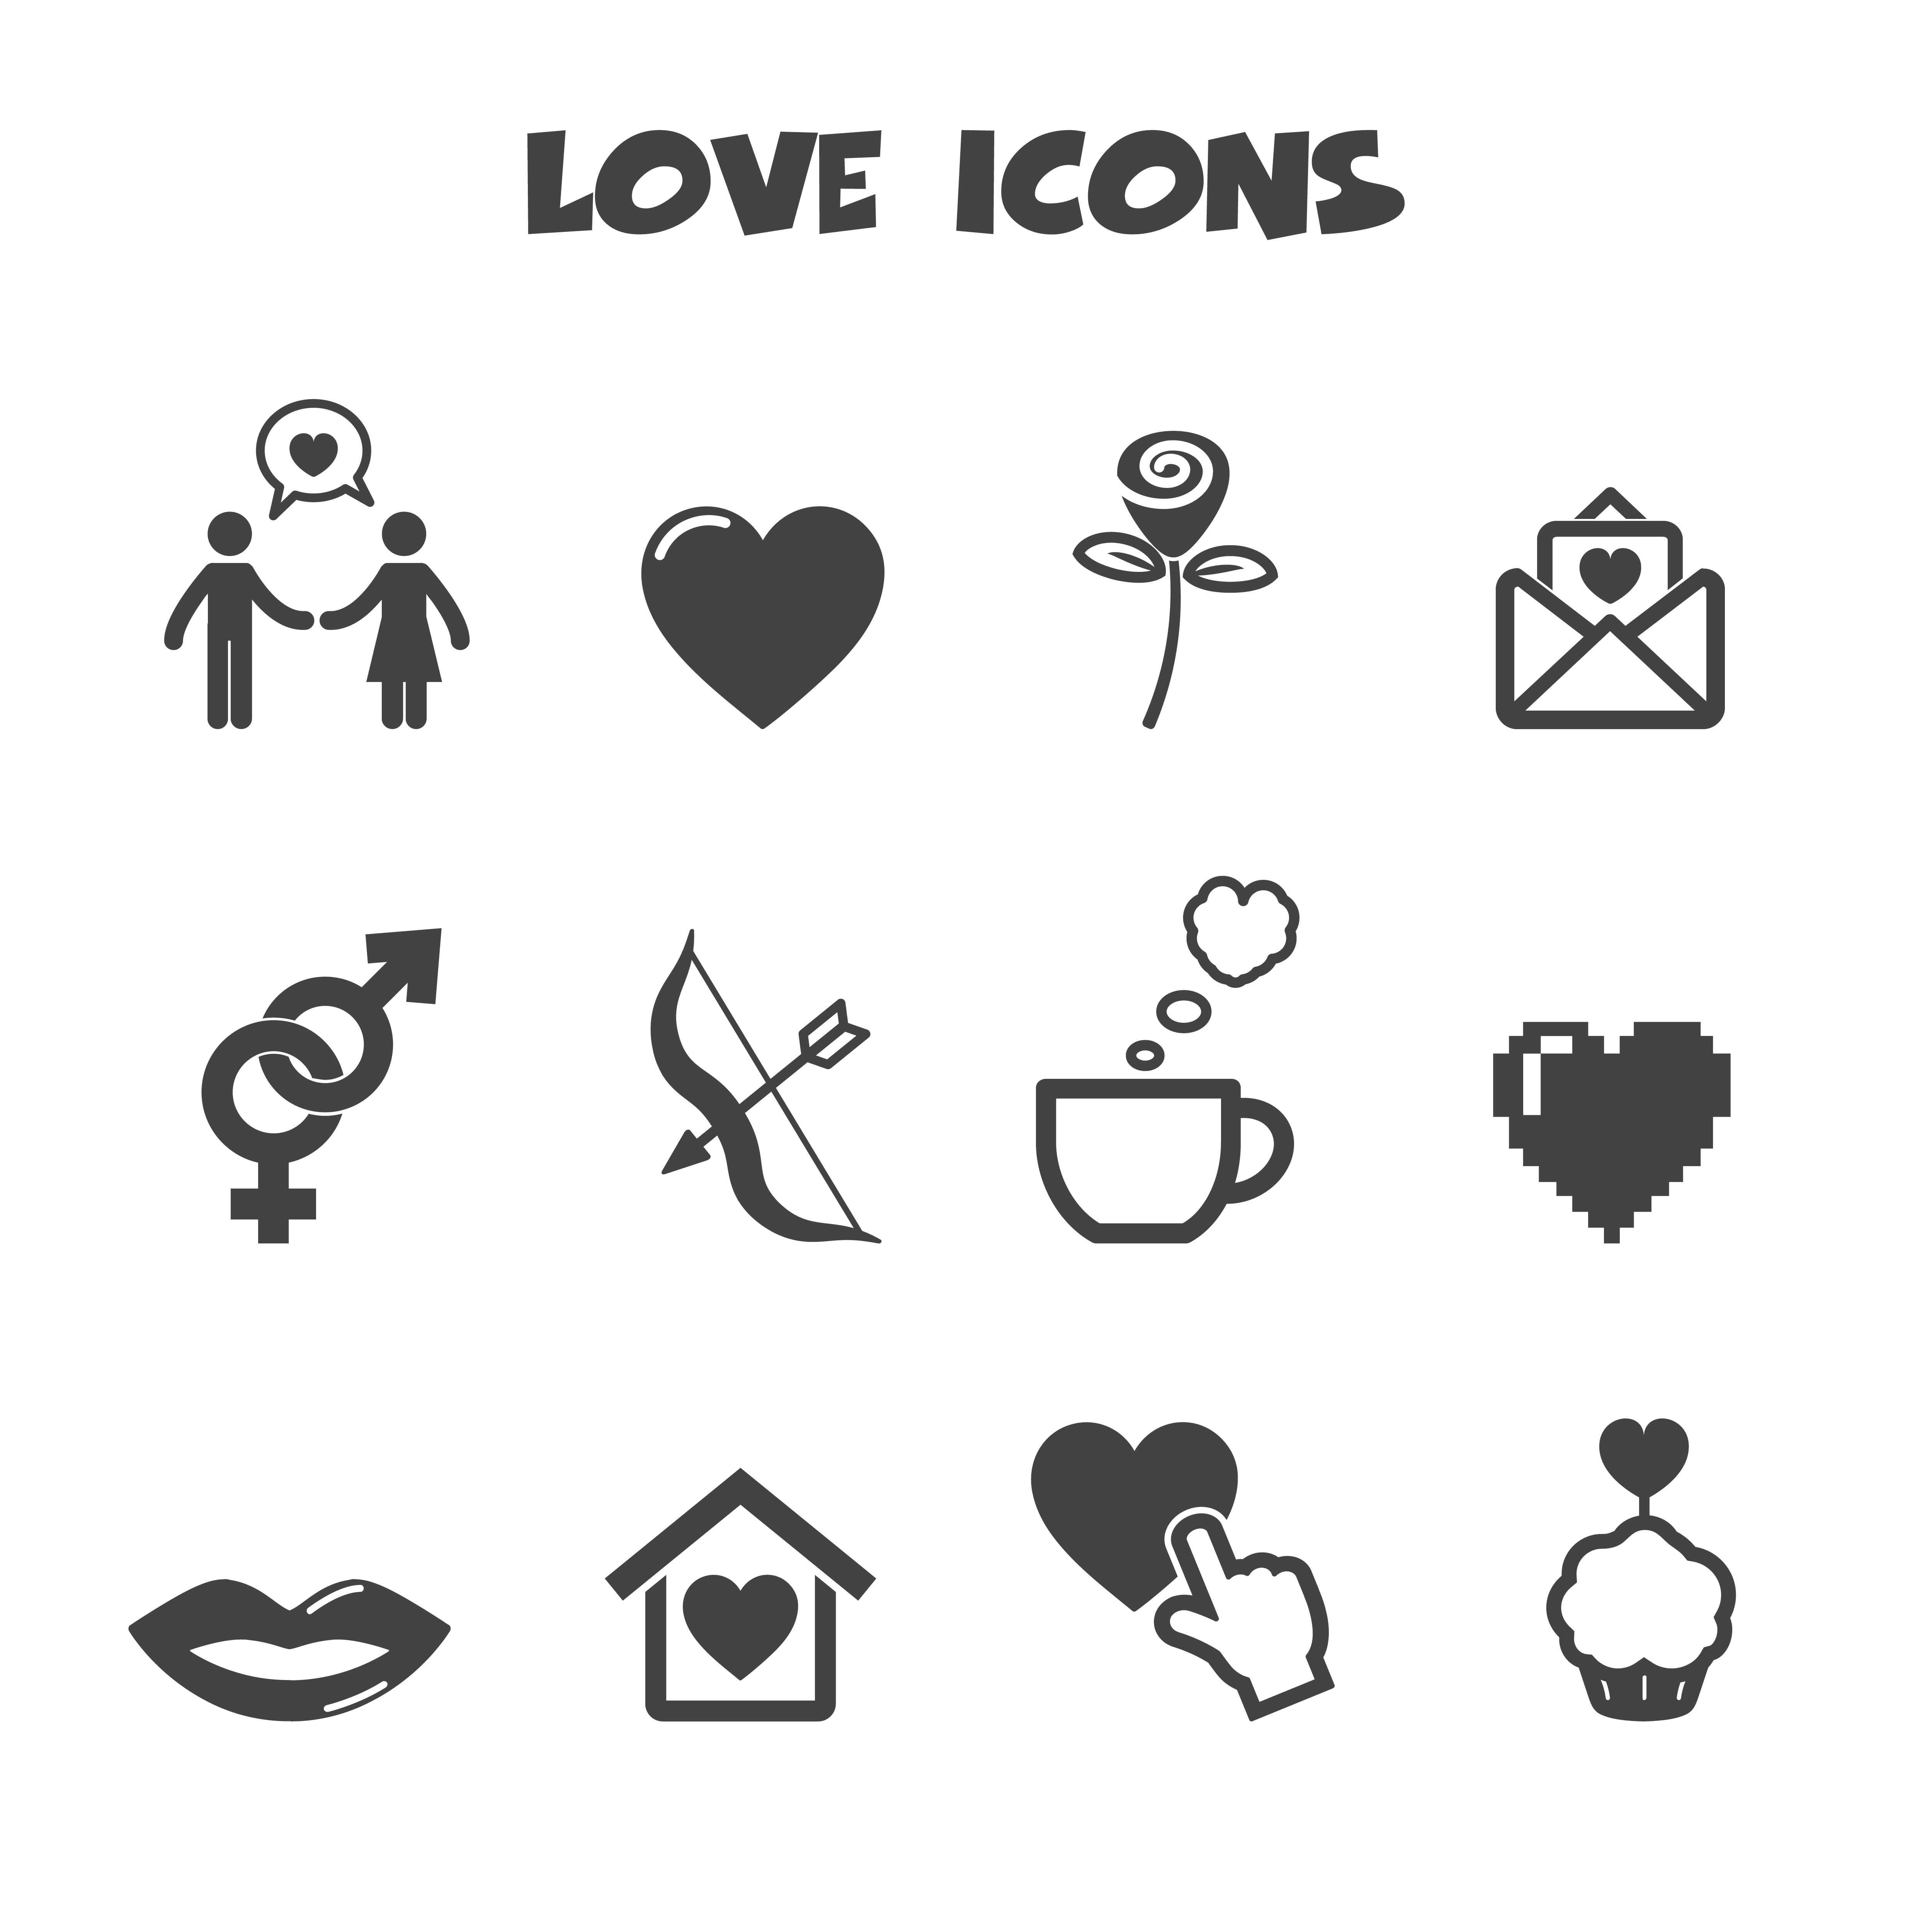 Fuck love icons